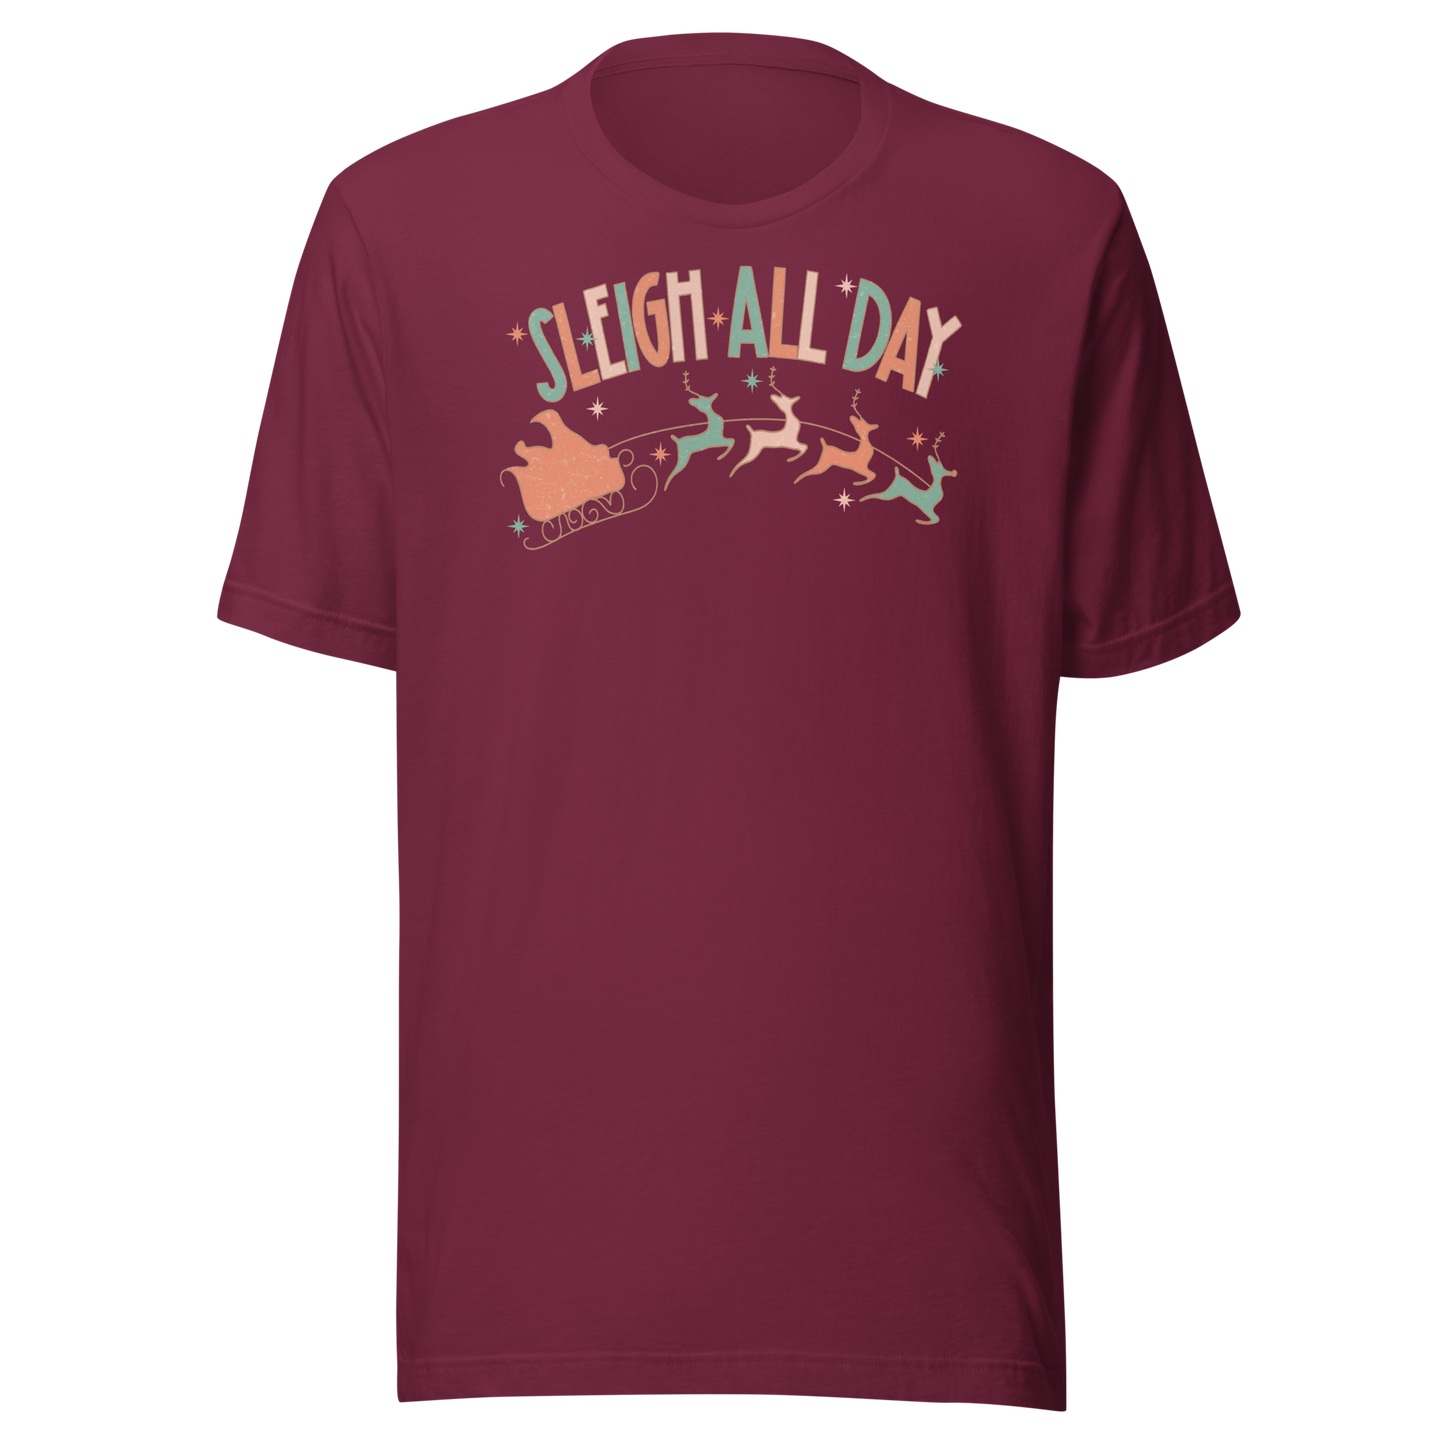 Sleigh All Day T-Shirt